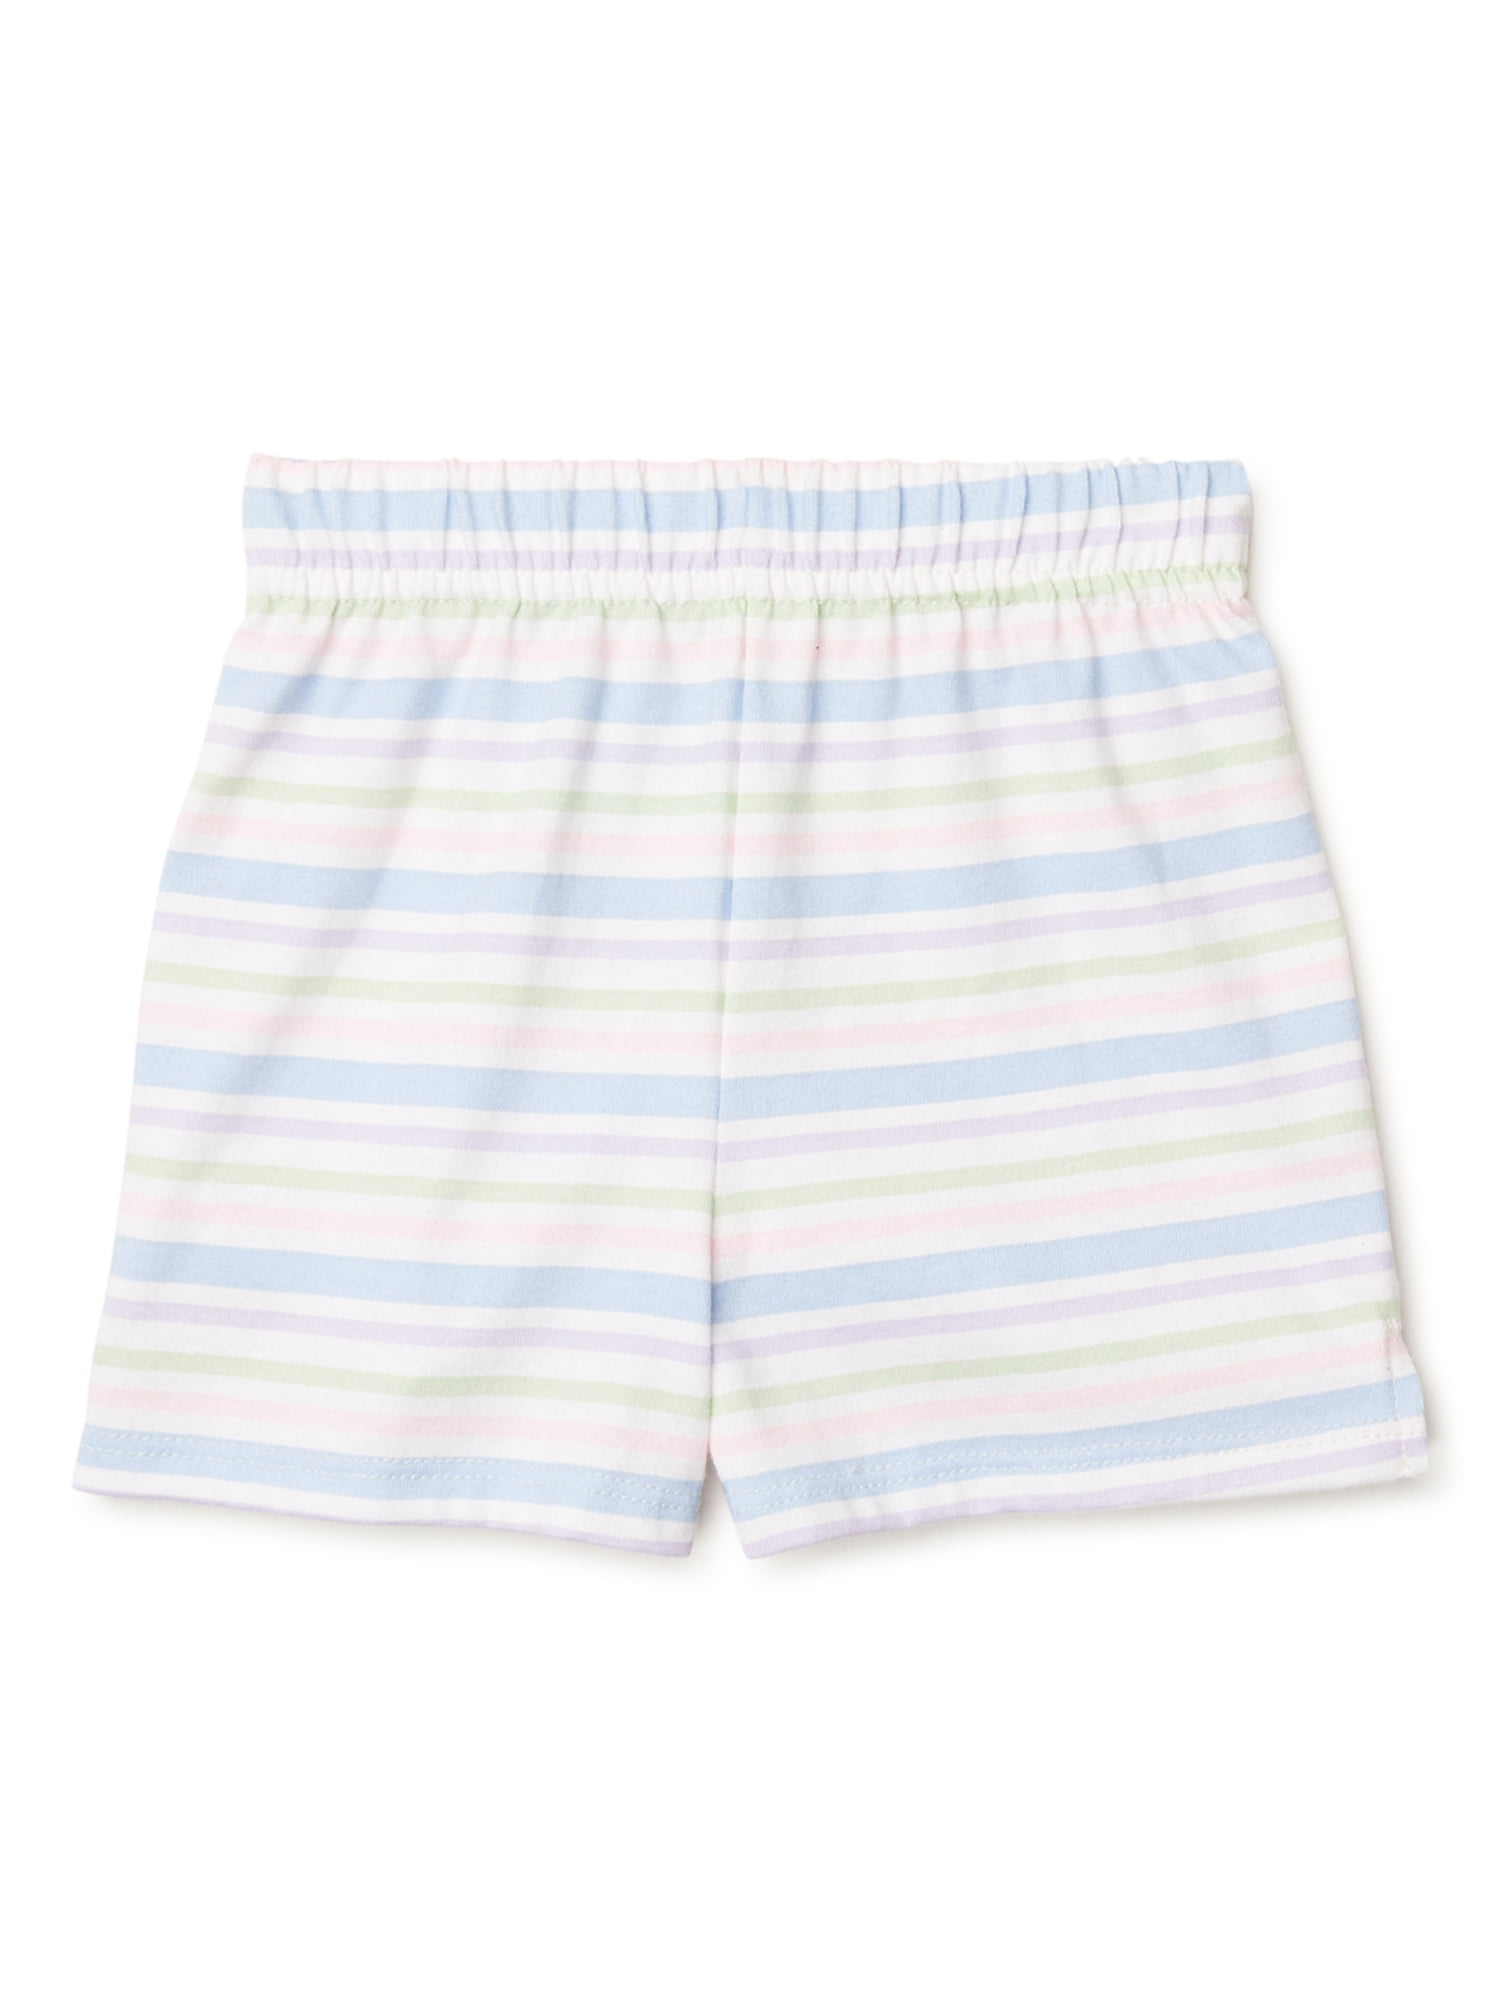 Garanimals Baby and Toddler Girls Print Jersey Shorts, Sizes 12M-5T